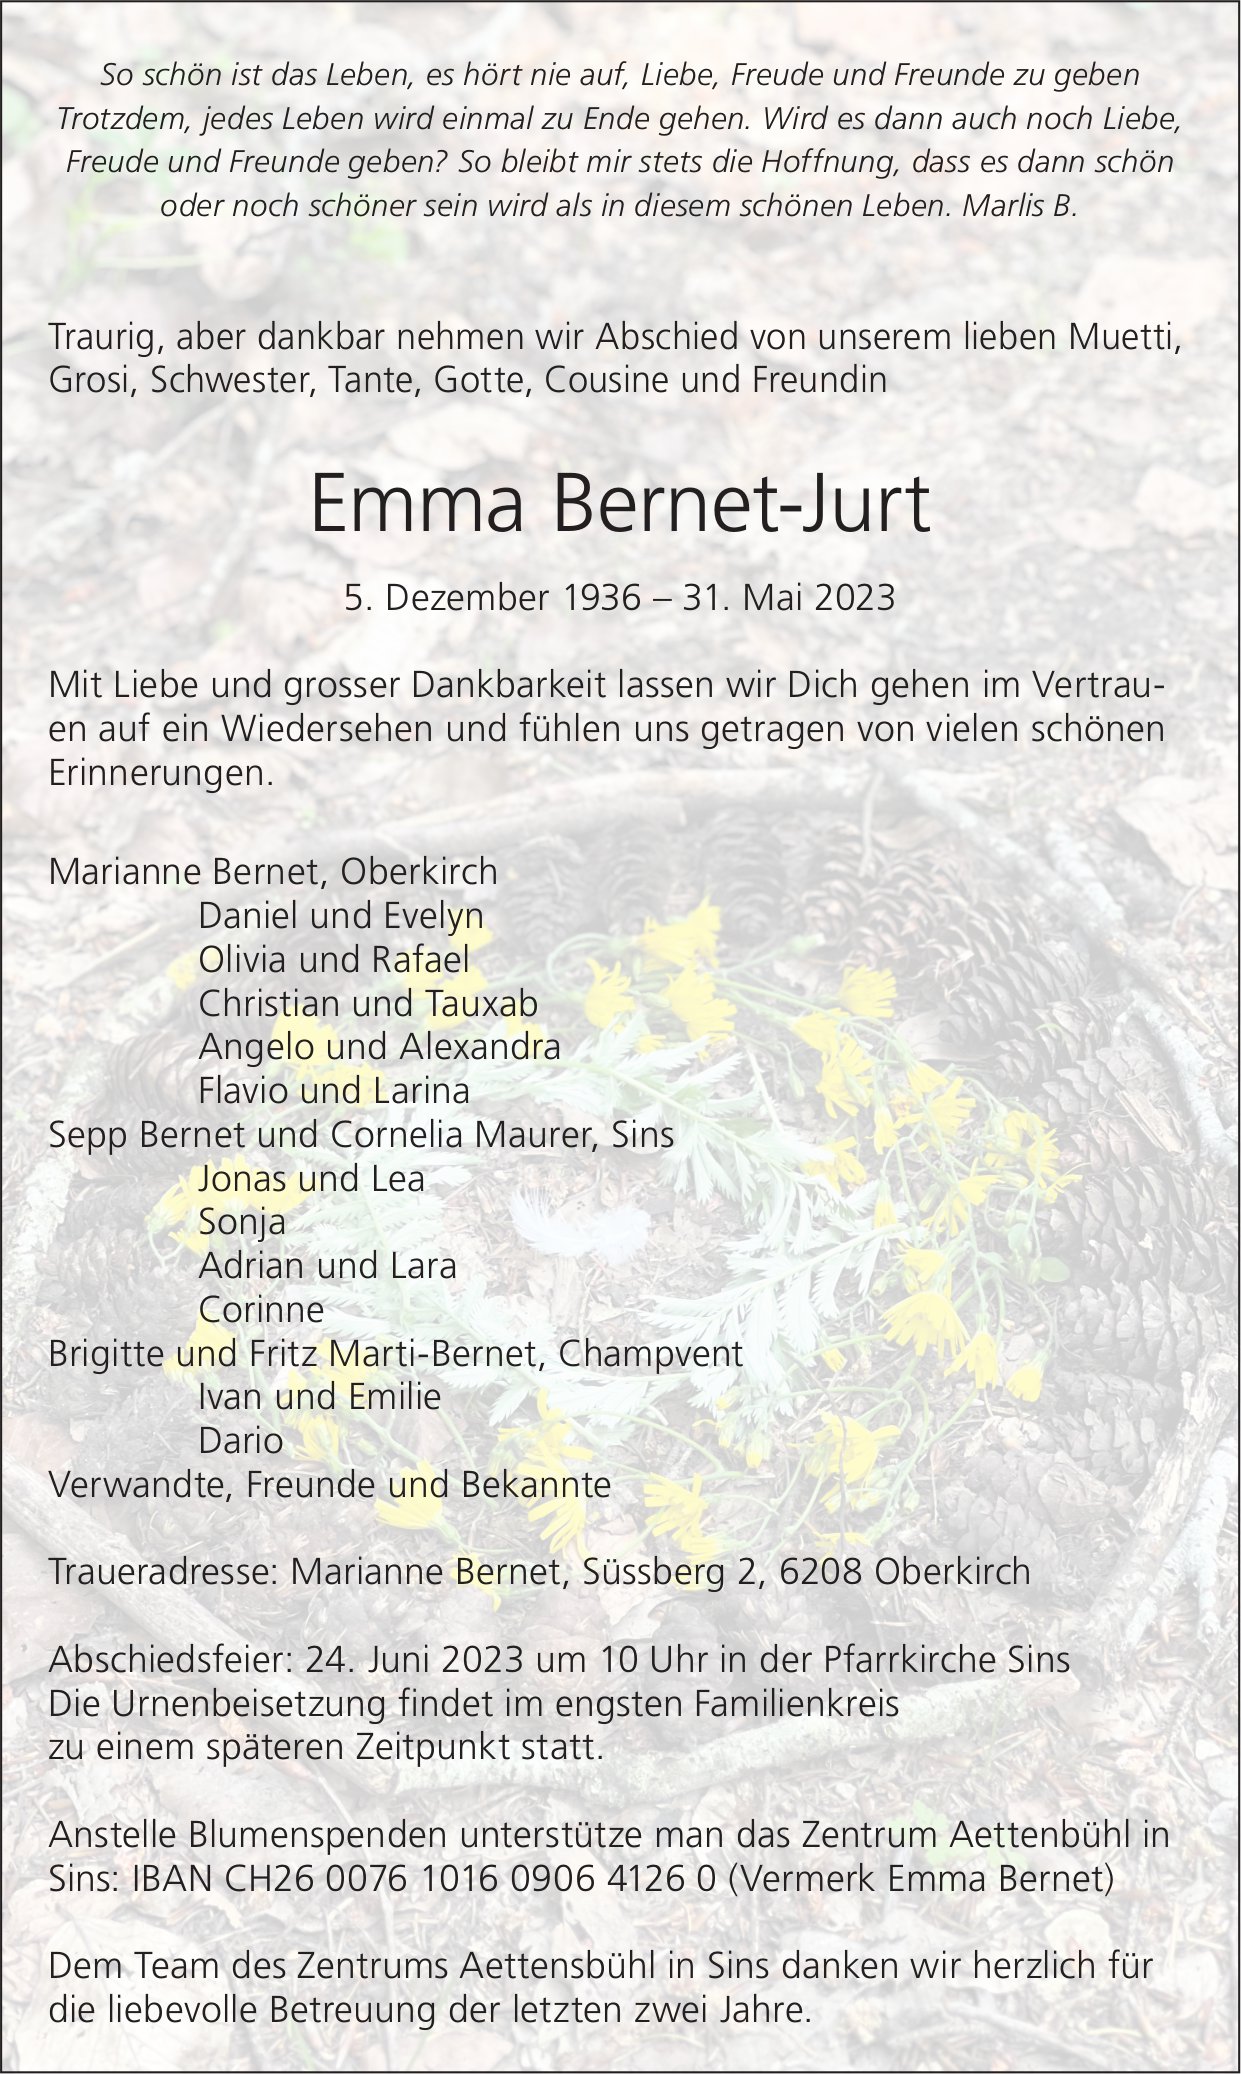 Bernet-Jurt Emma, Mai 2023 / TA